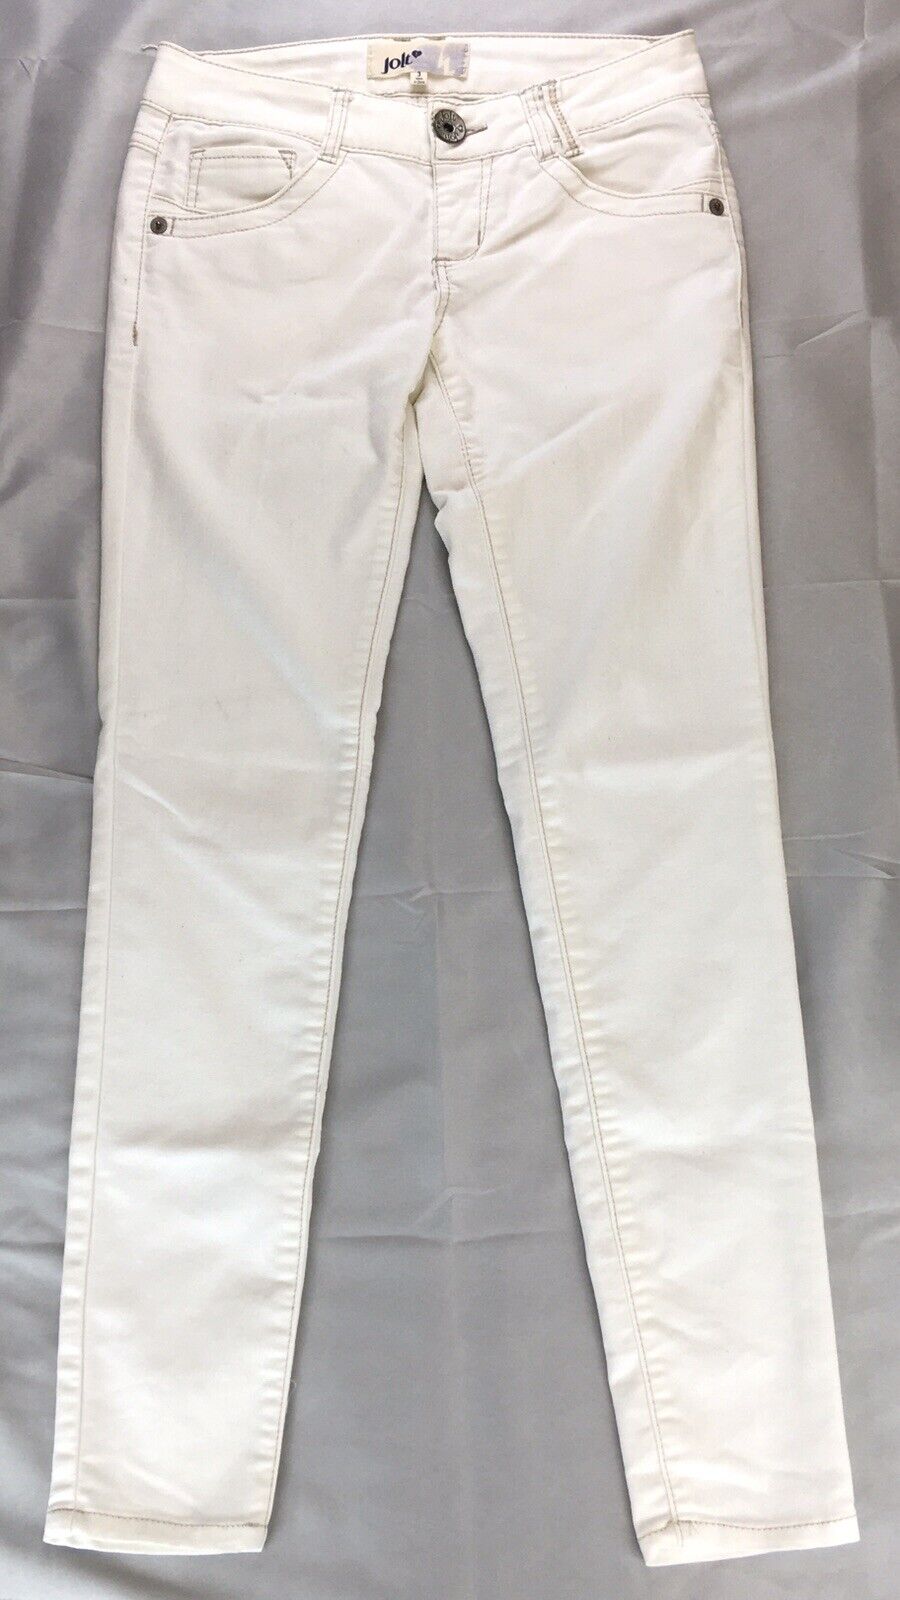 JOLT White Denim Jeans, 6 Pocket - Juniors Size 3 - image 1